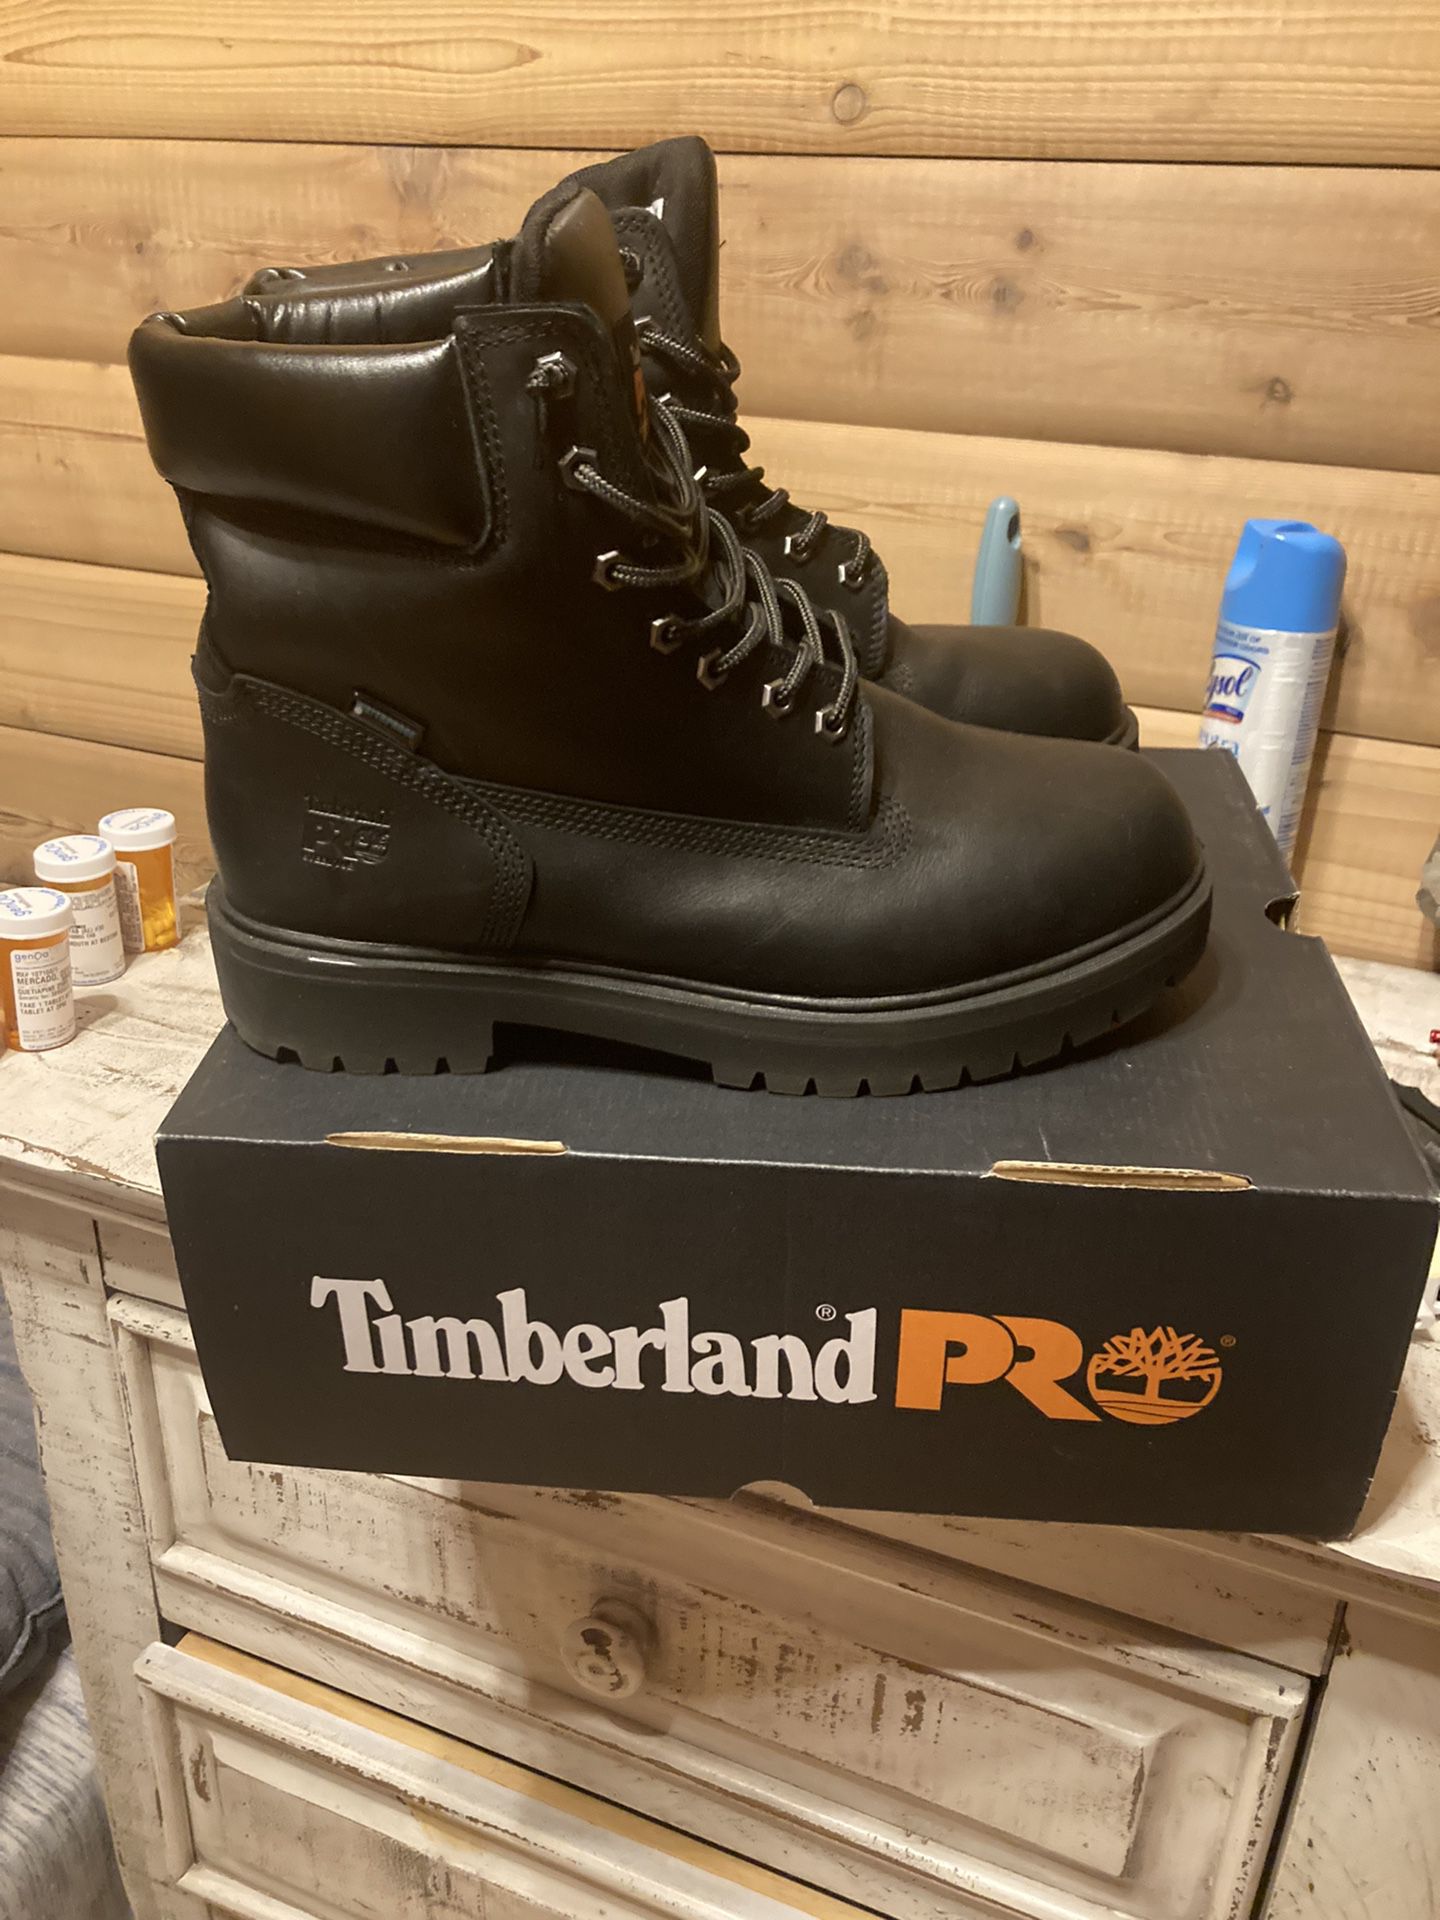 Size 11.5 Timberland Pro Steel Toe 